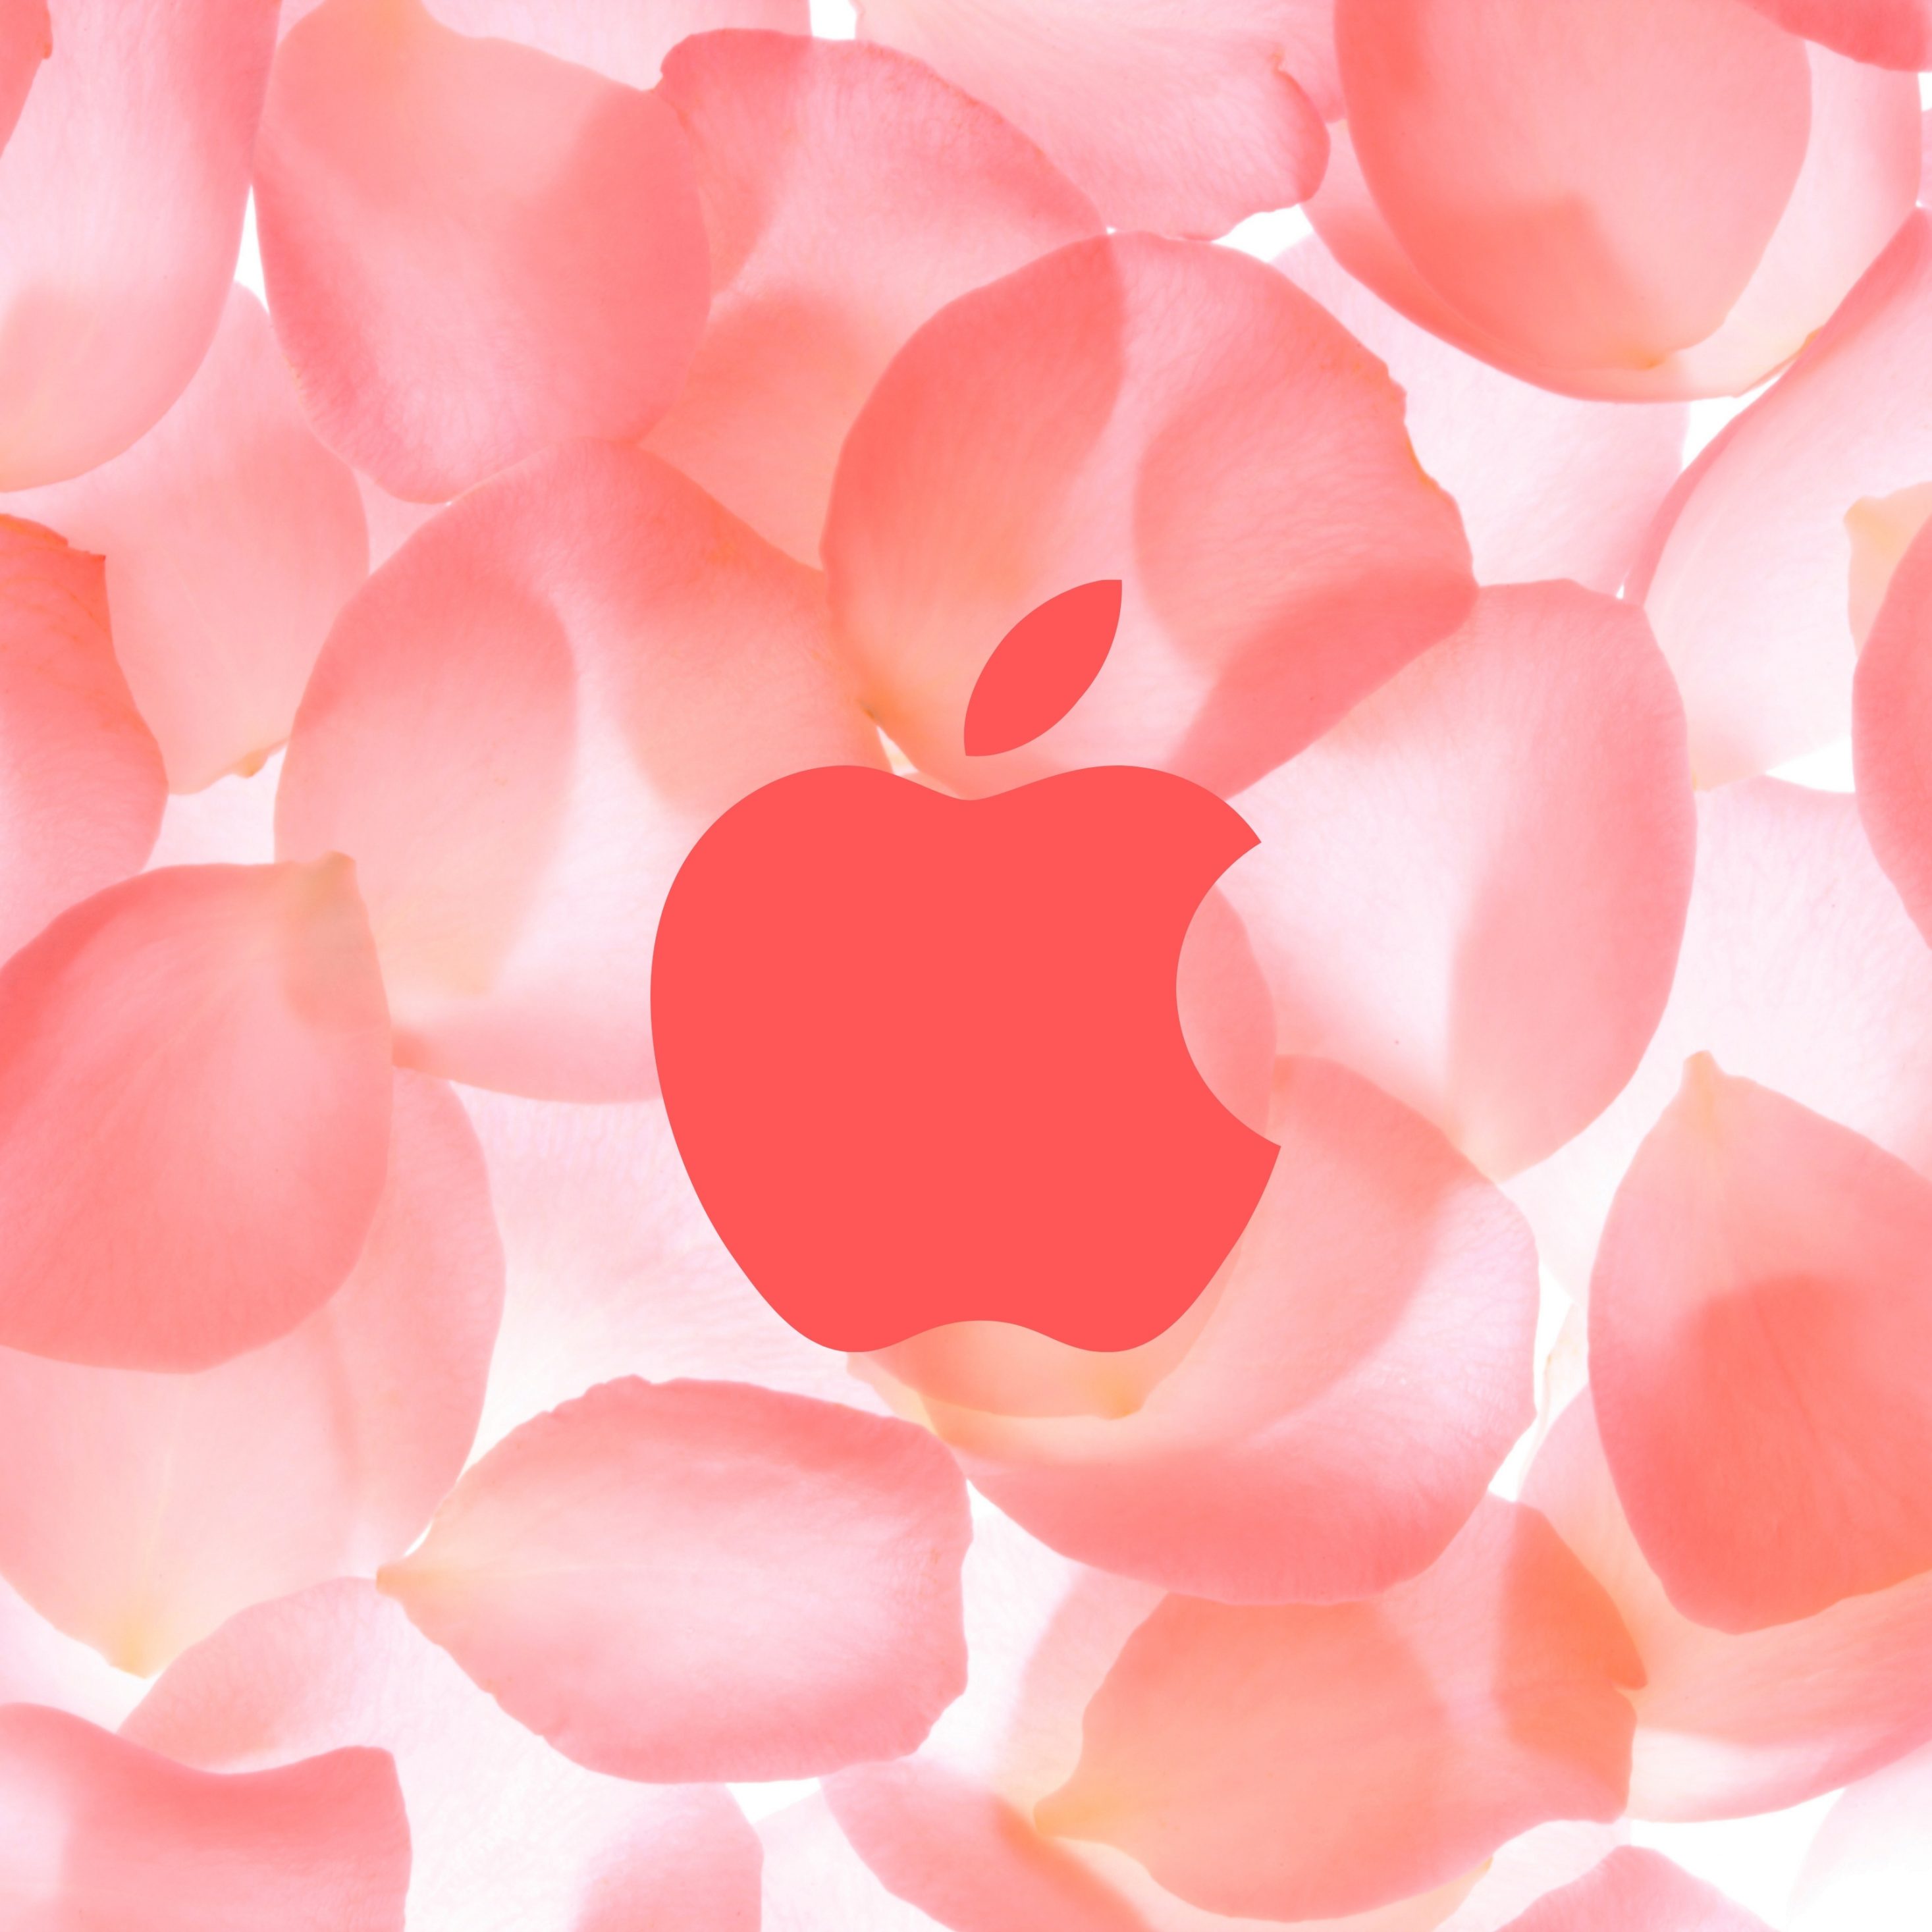 2934x2934 iOS iPad wallpaper 4k Apple Logo Iphone Macos Beautiful Flower Background iPad Wallpaper 2934x2934 pixels resolution